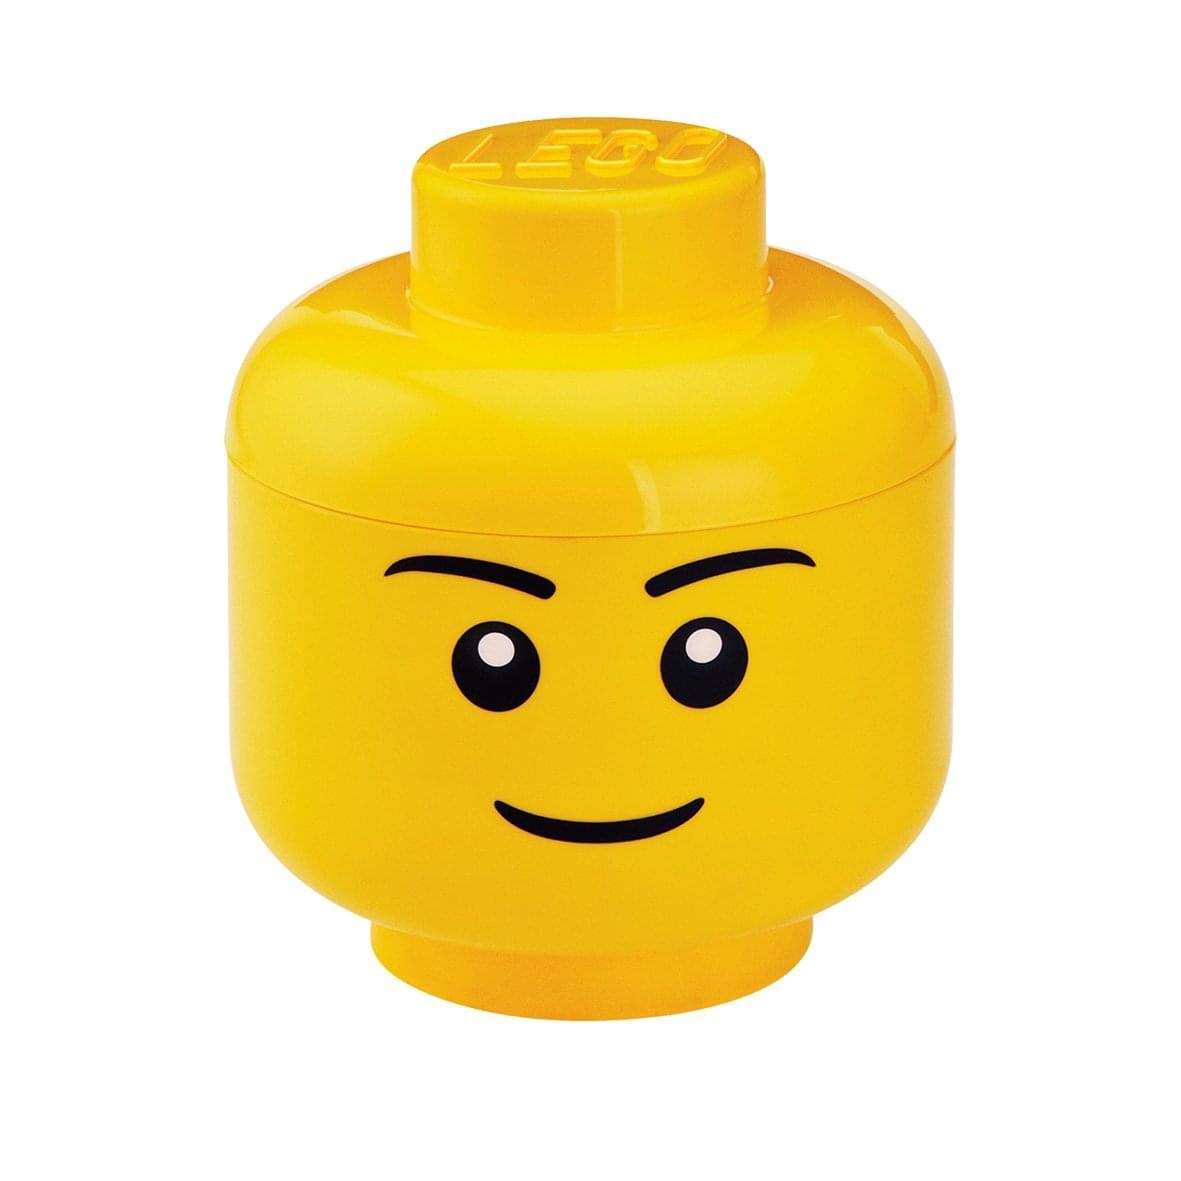 Photos - Construction Toy Lego Small Storage Head, Boy RMC-40311724-C 